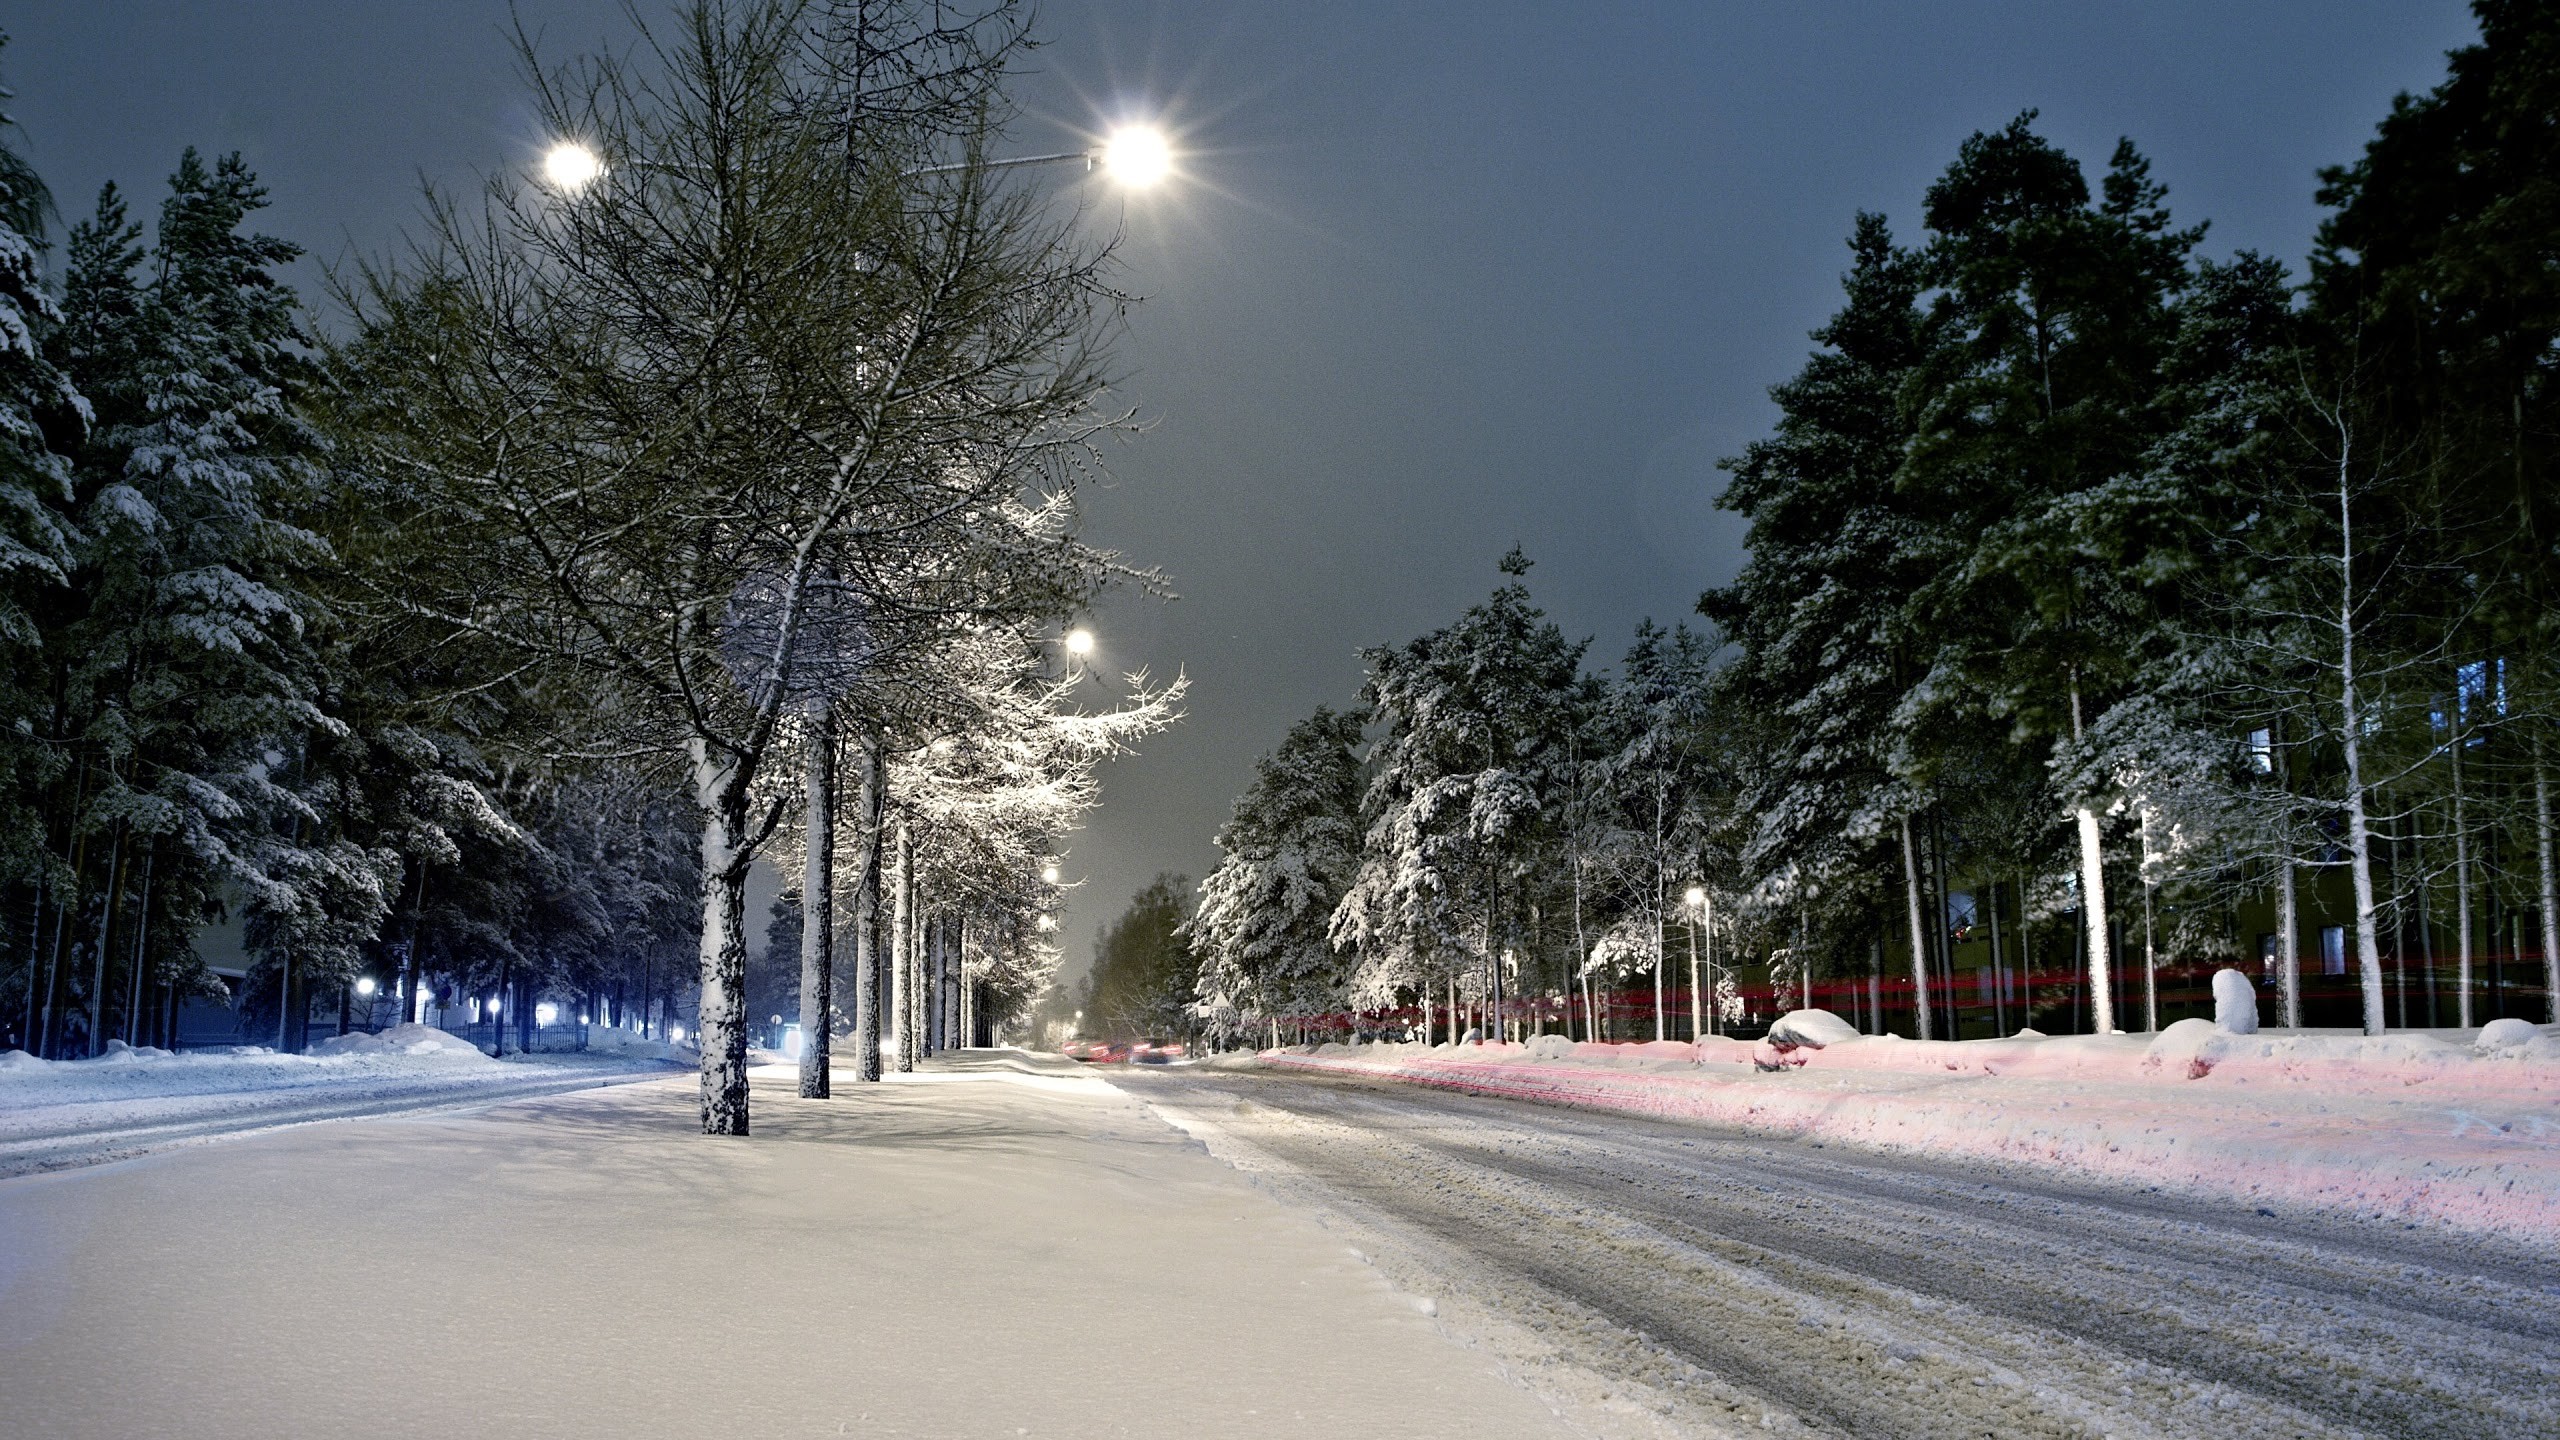 2560x1440 Wallpaper: Street Lights Winter Snow Scenery